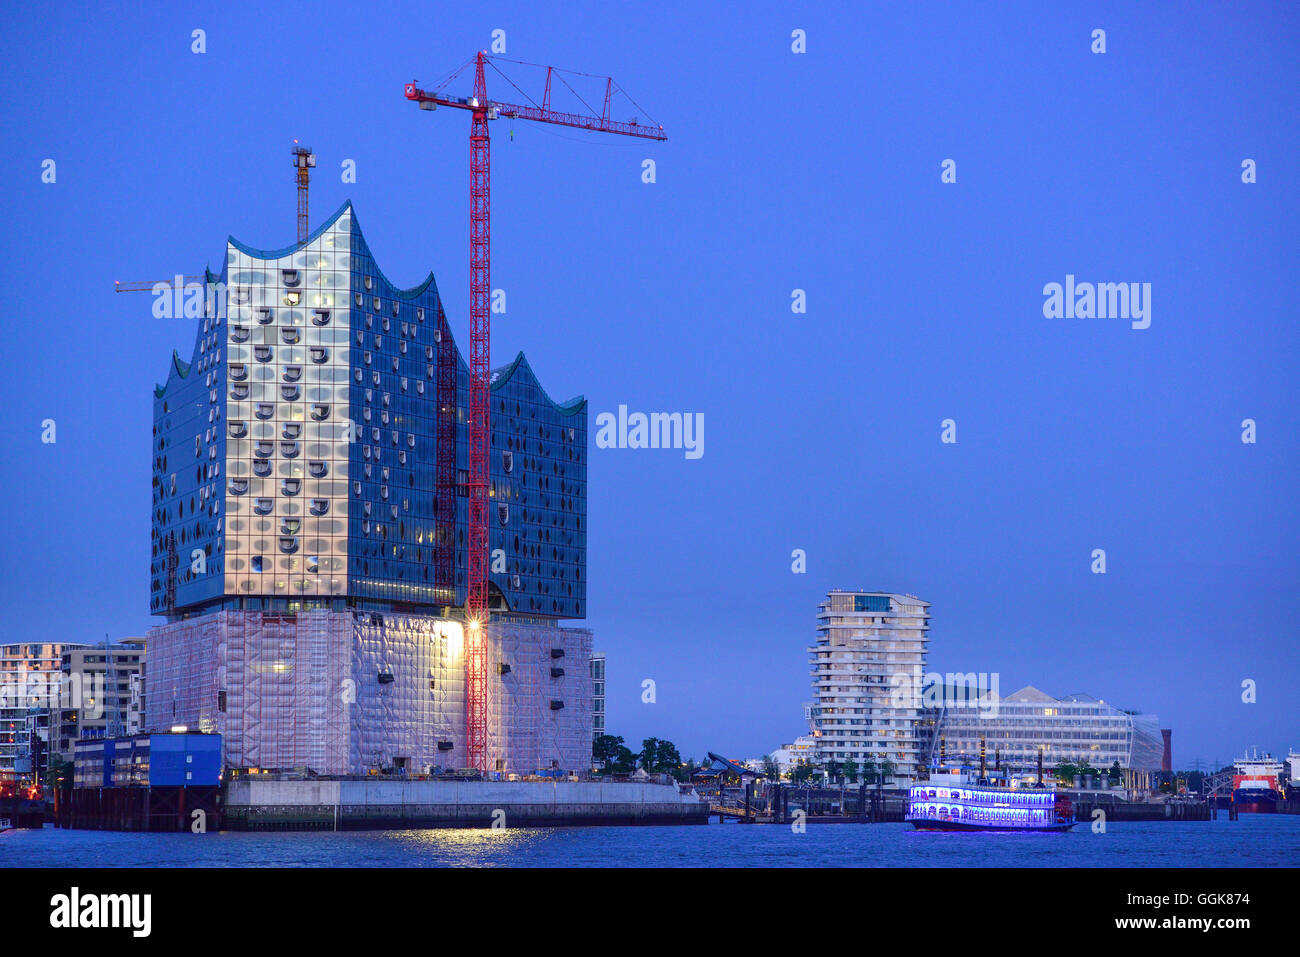 Elbphilharmonie et Marco Polo Tower, Hafencity, Hambourg, Allemagne Banque D'Images